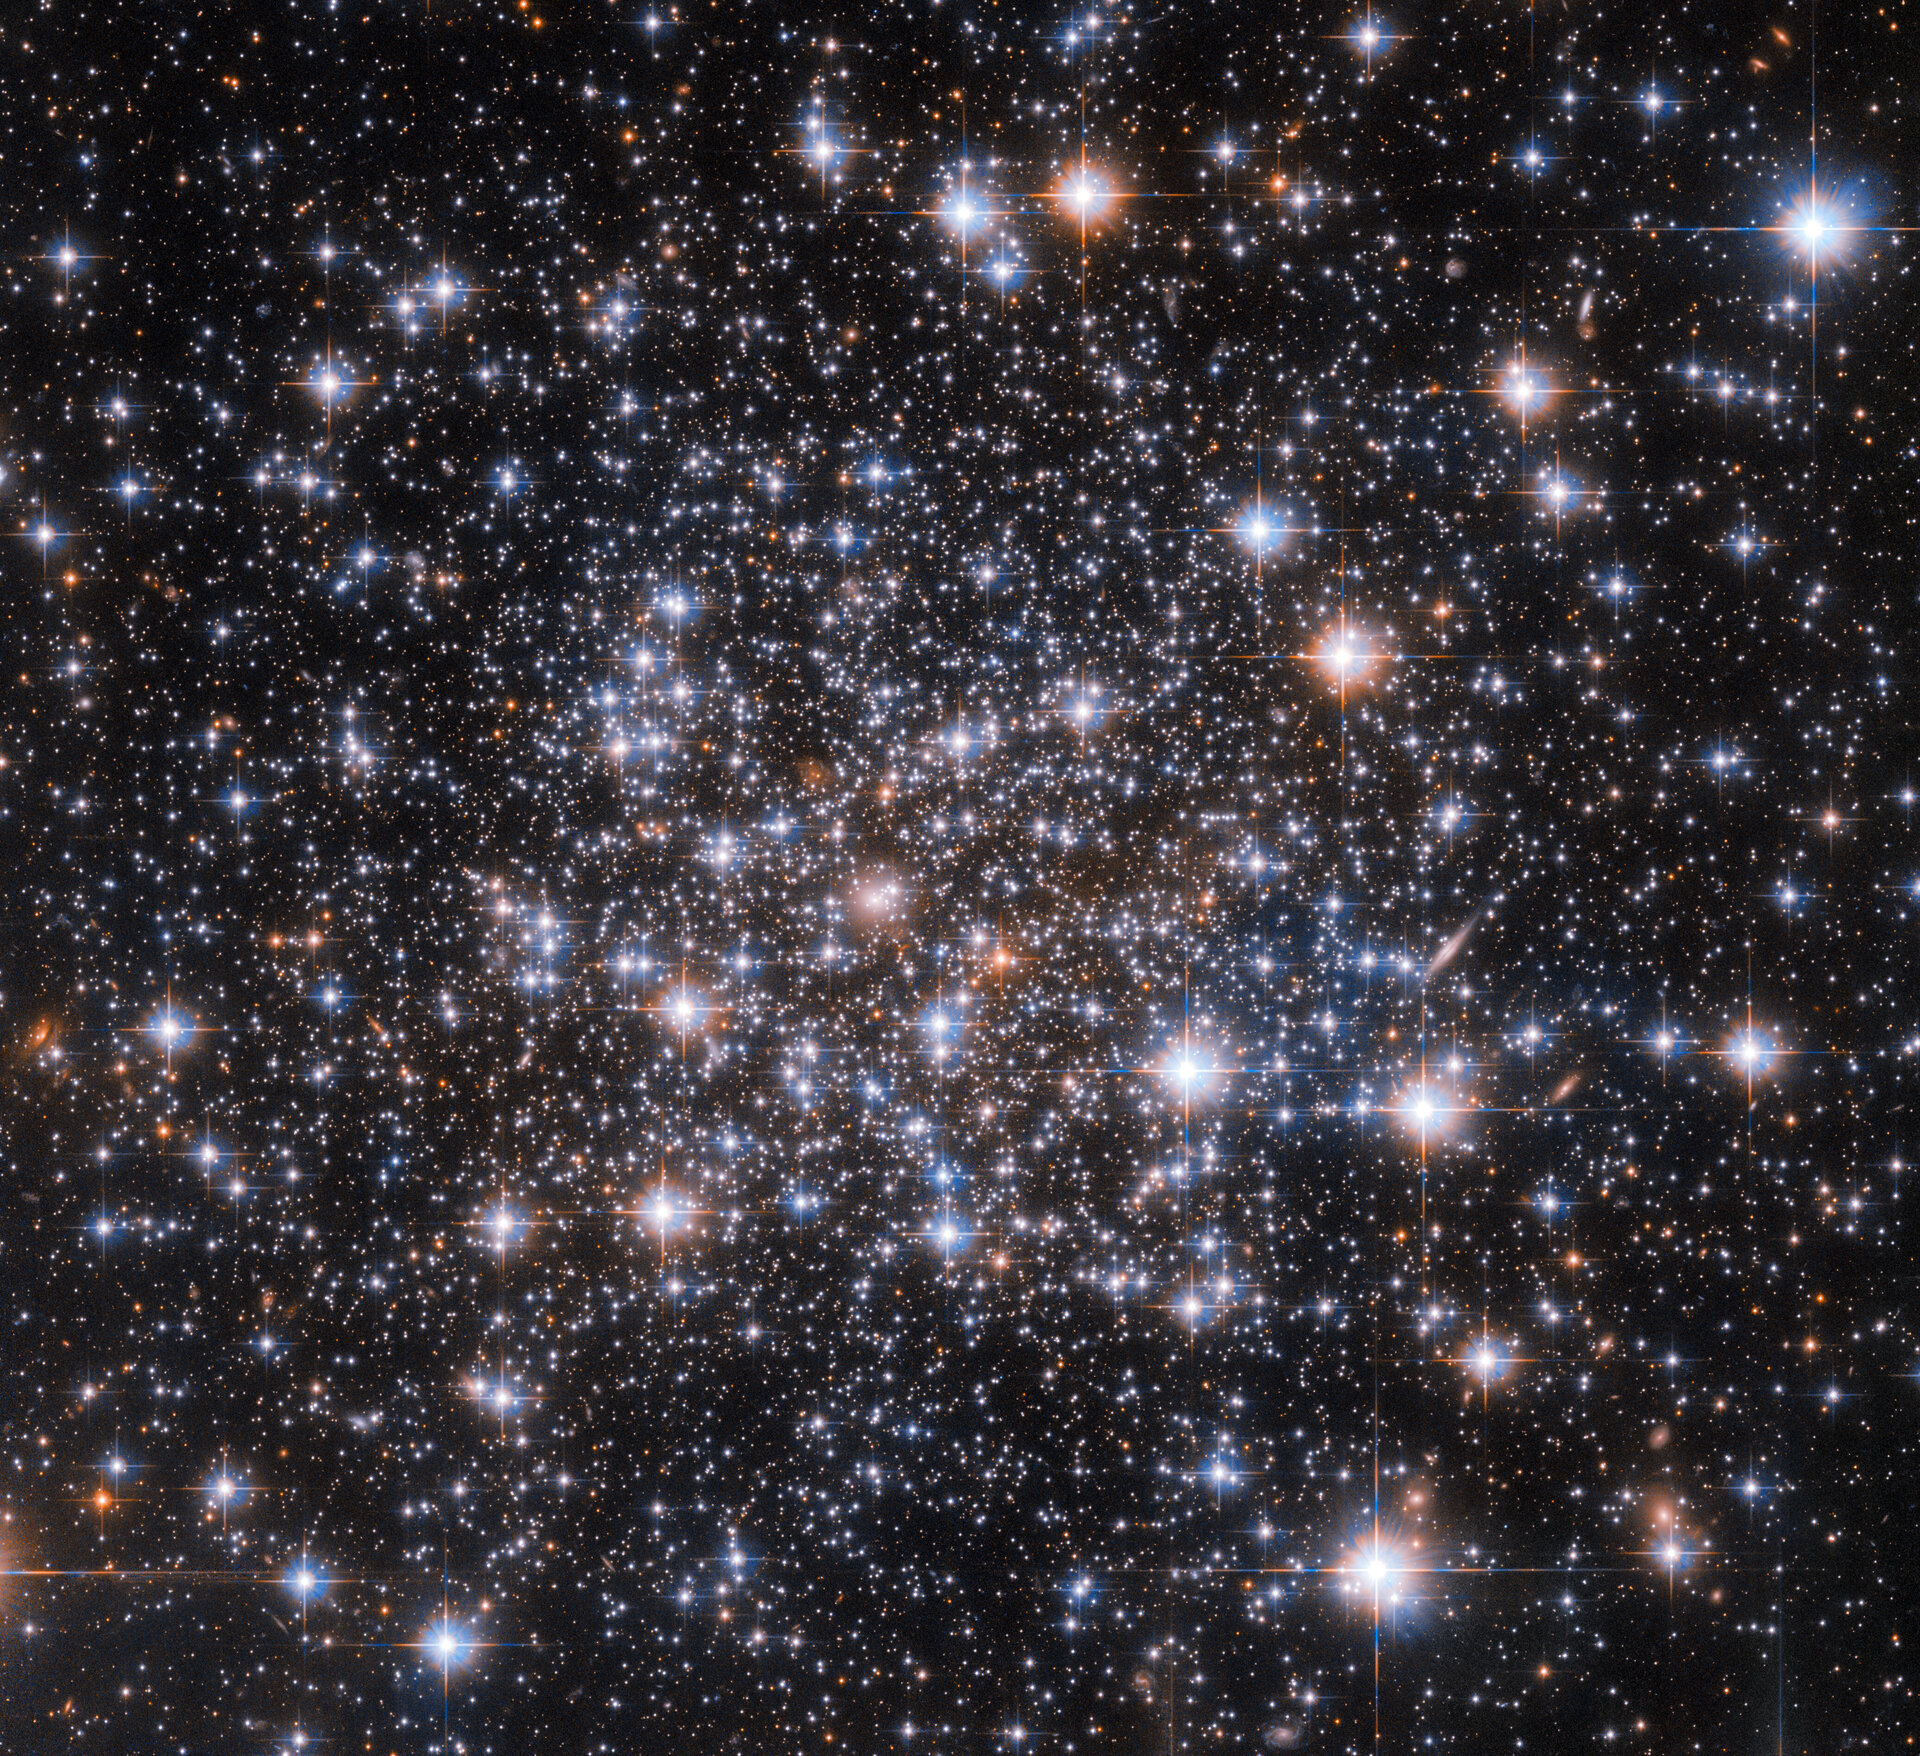 Hubble investigates an enigmatic globular cluster